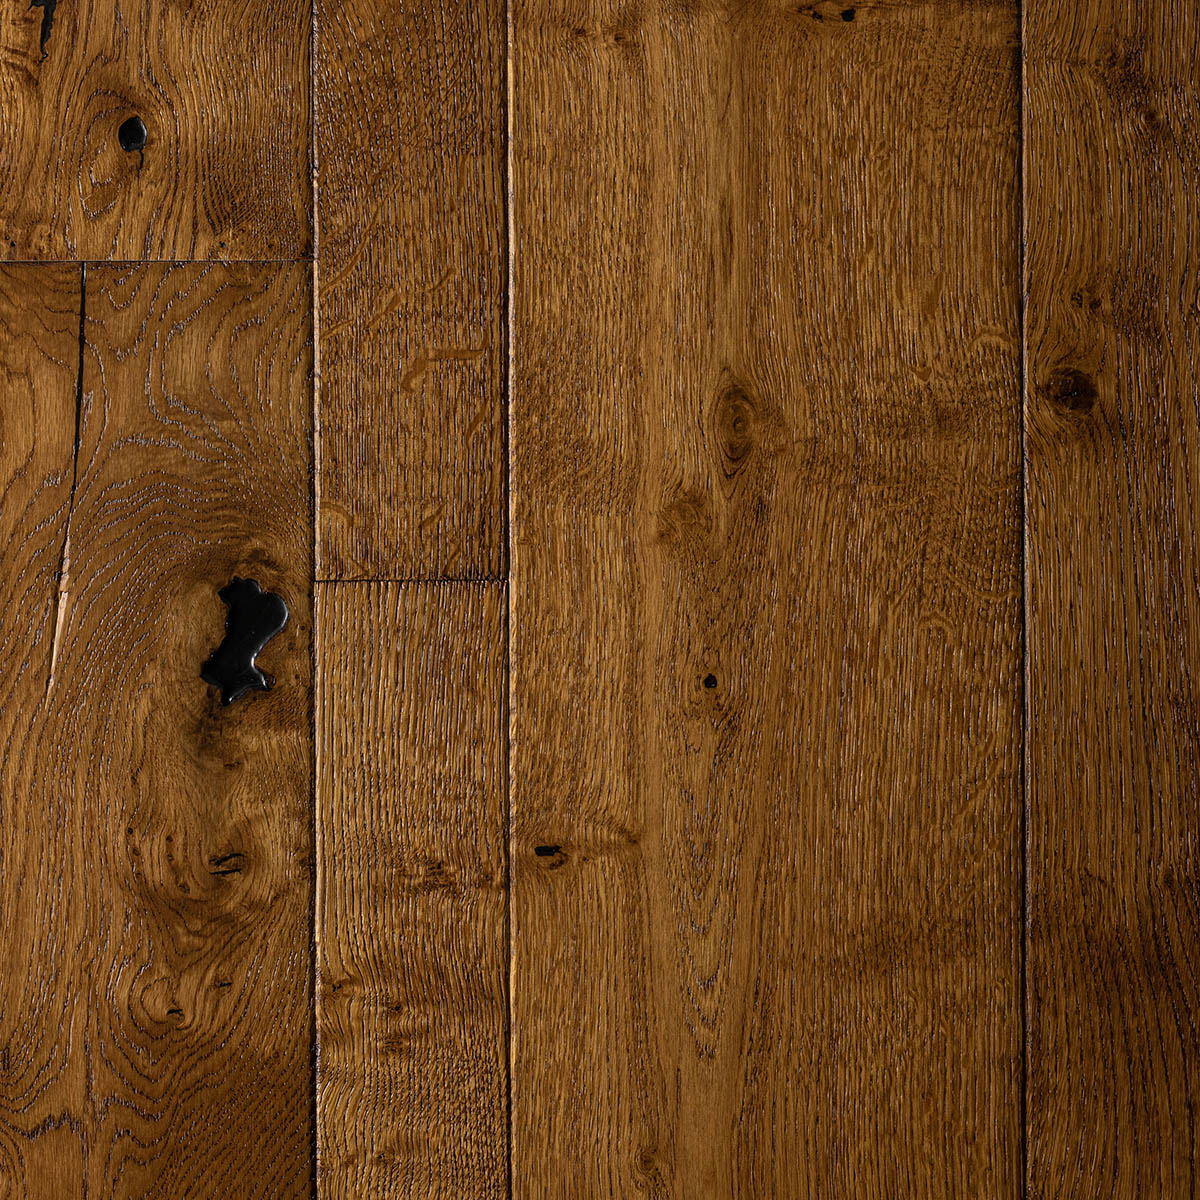 Bespoke solid and engineered wood flooring